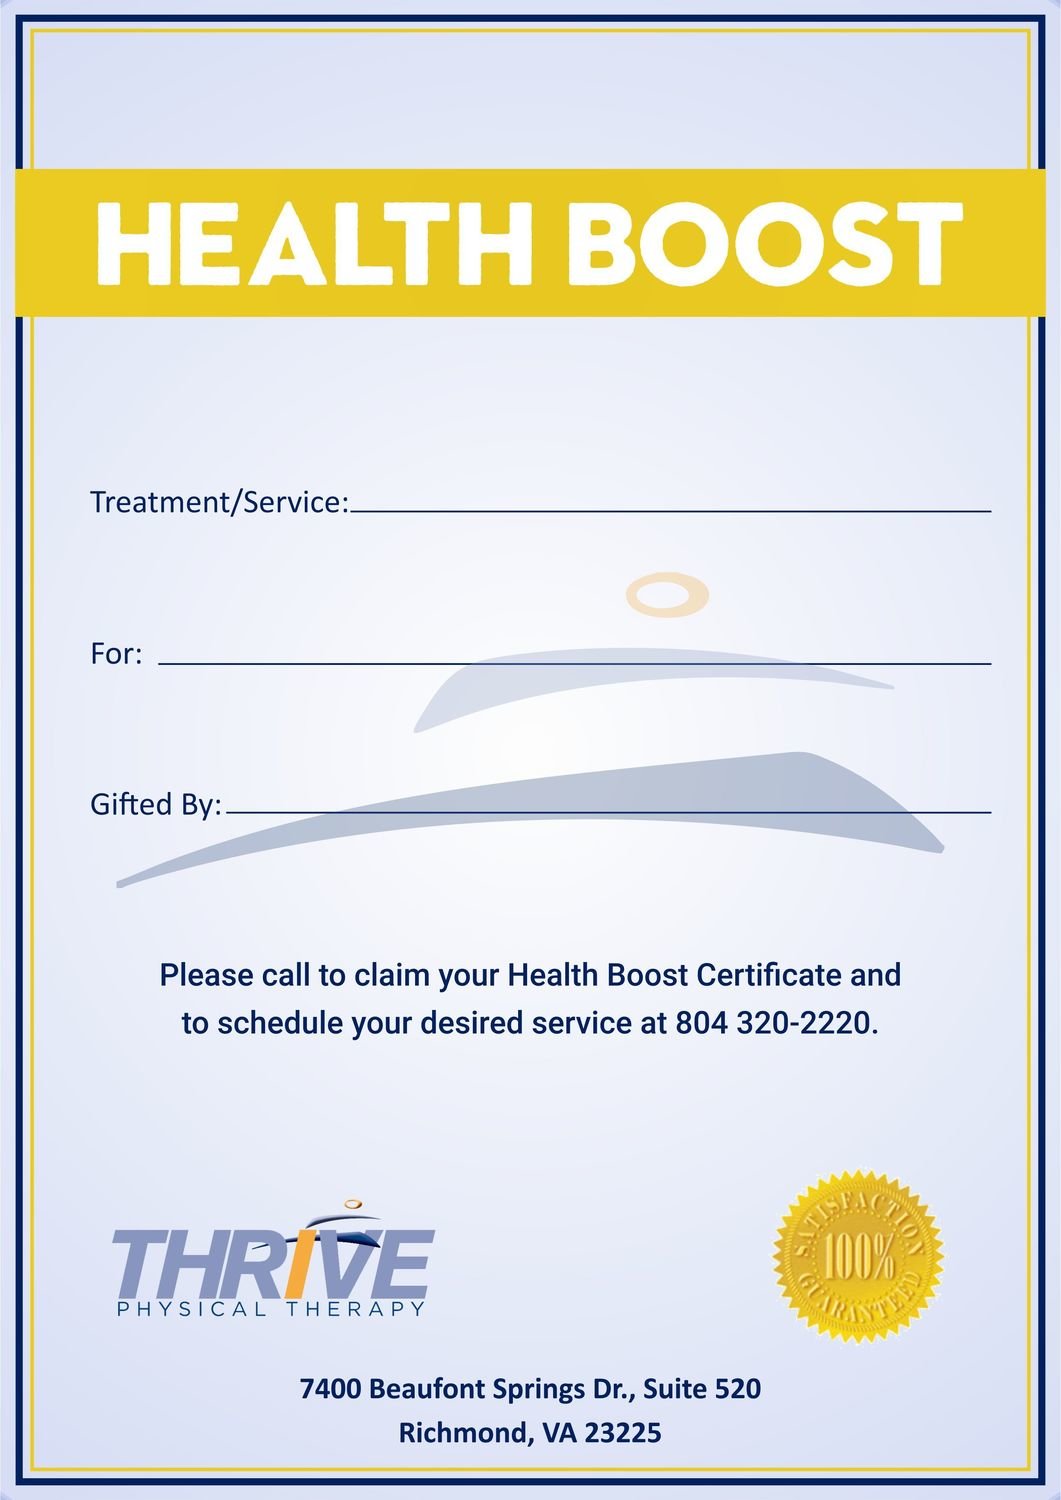 Health Boost Gift Certificate-Platinum